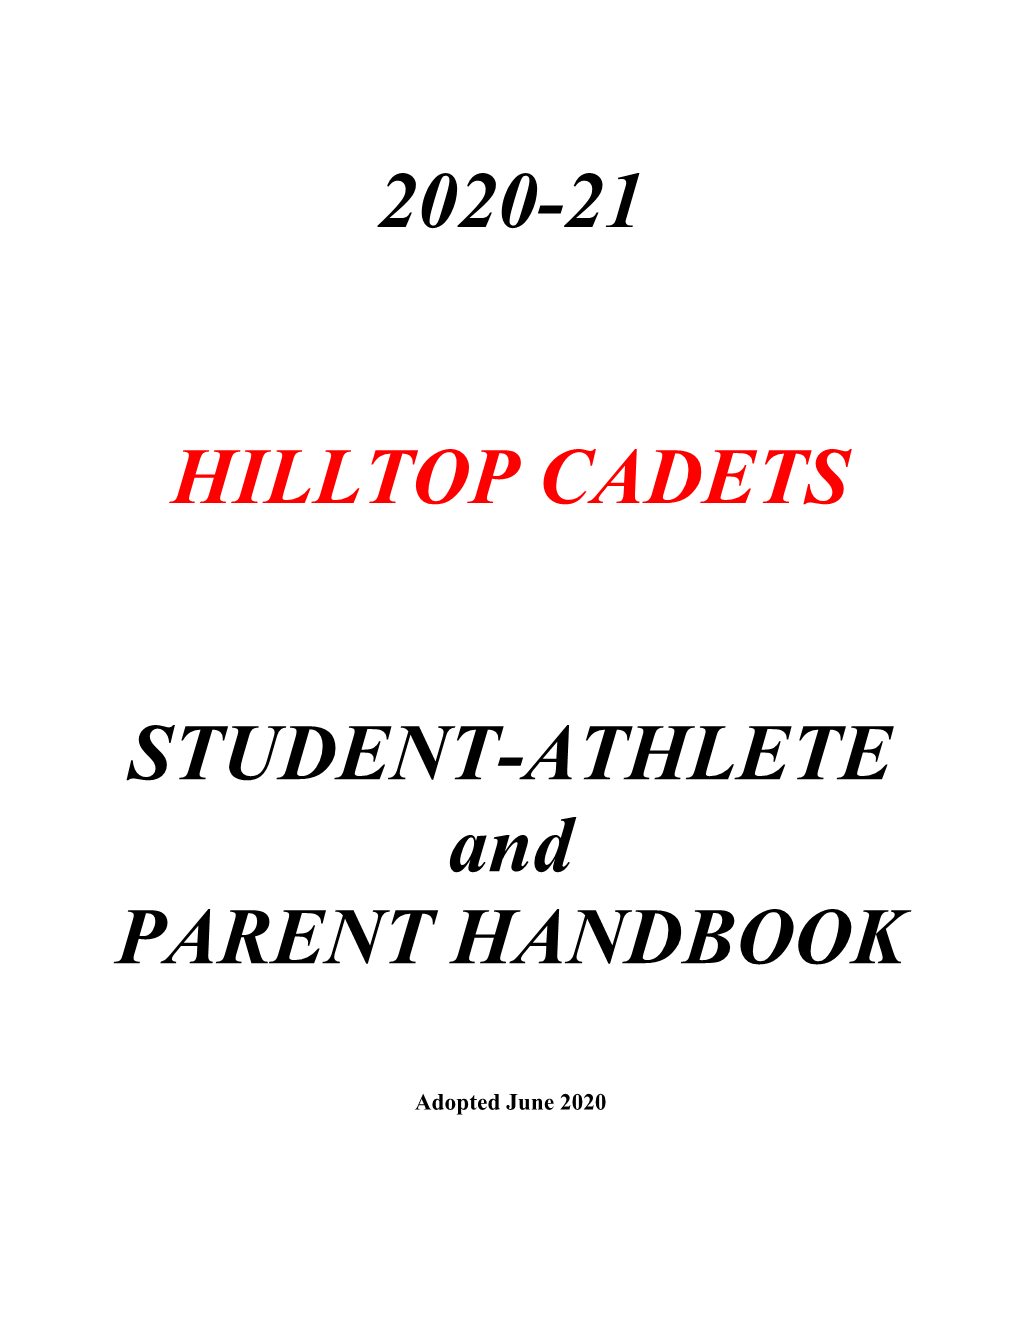 2020-21 HILLTOP CADETS STUDENT-ATHLETE and PARENT